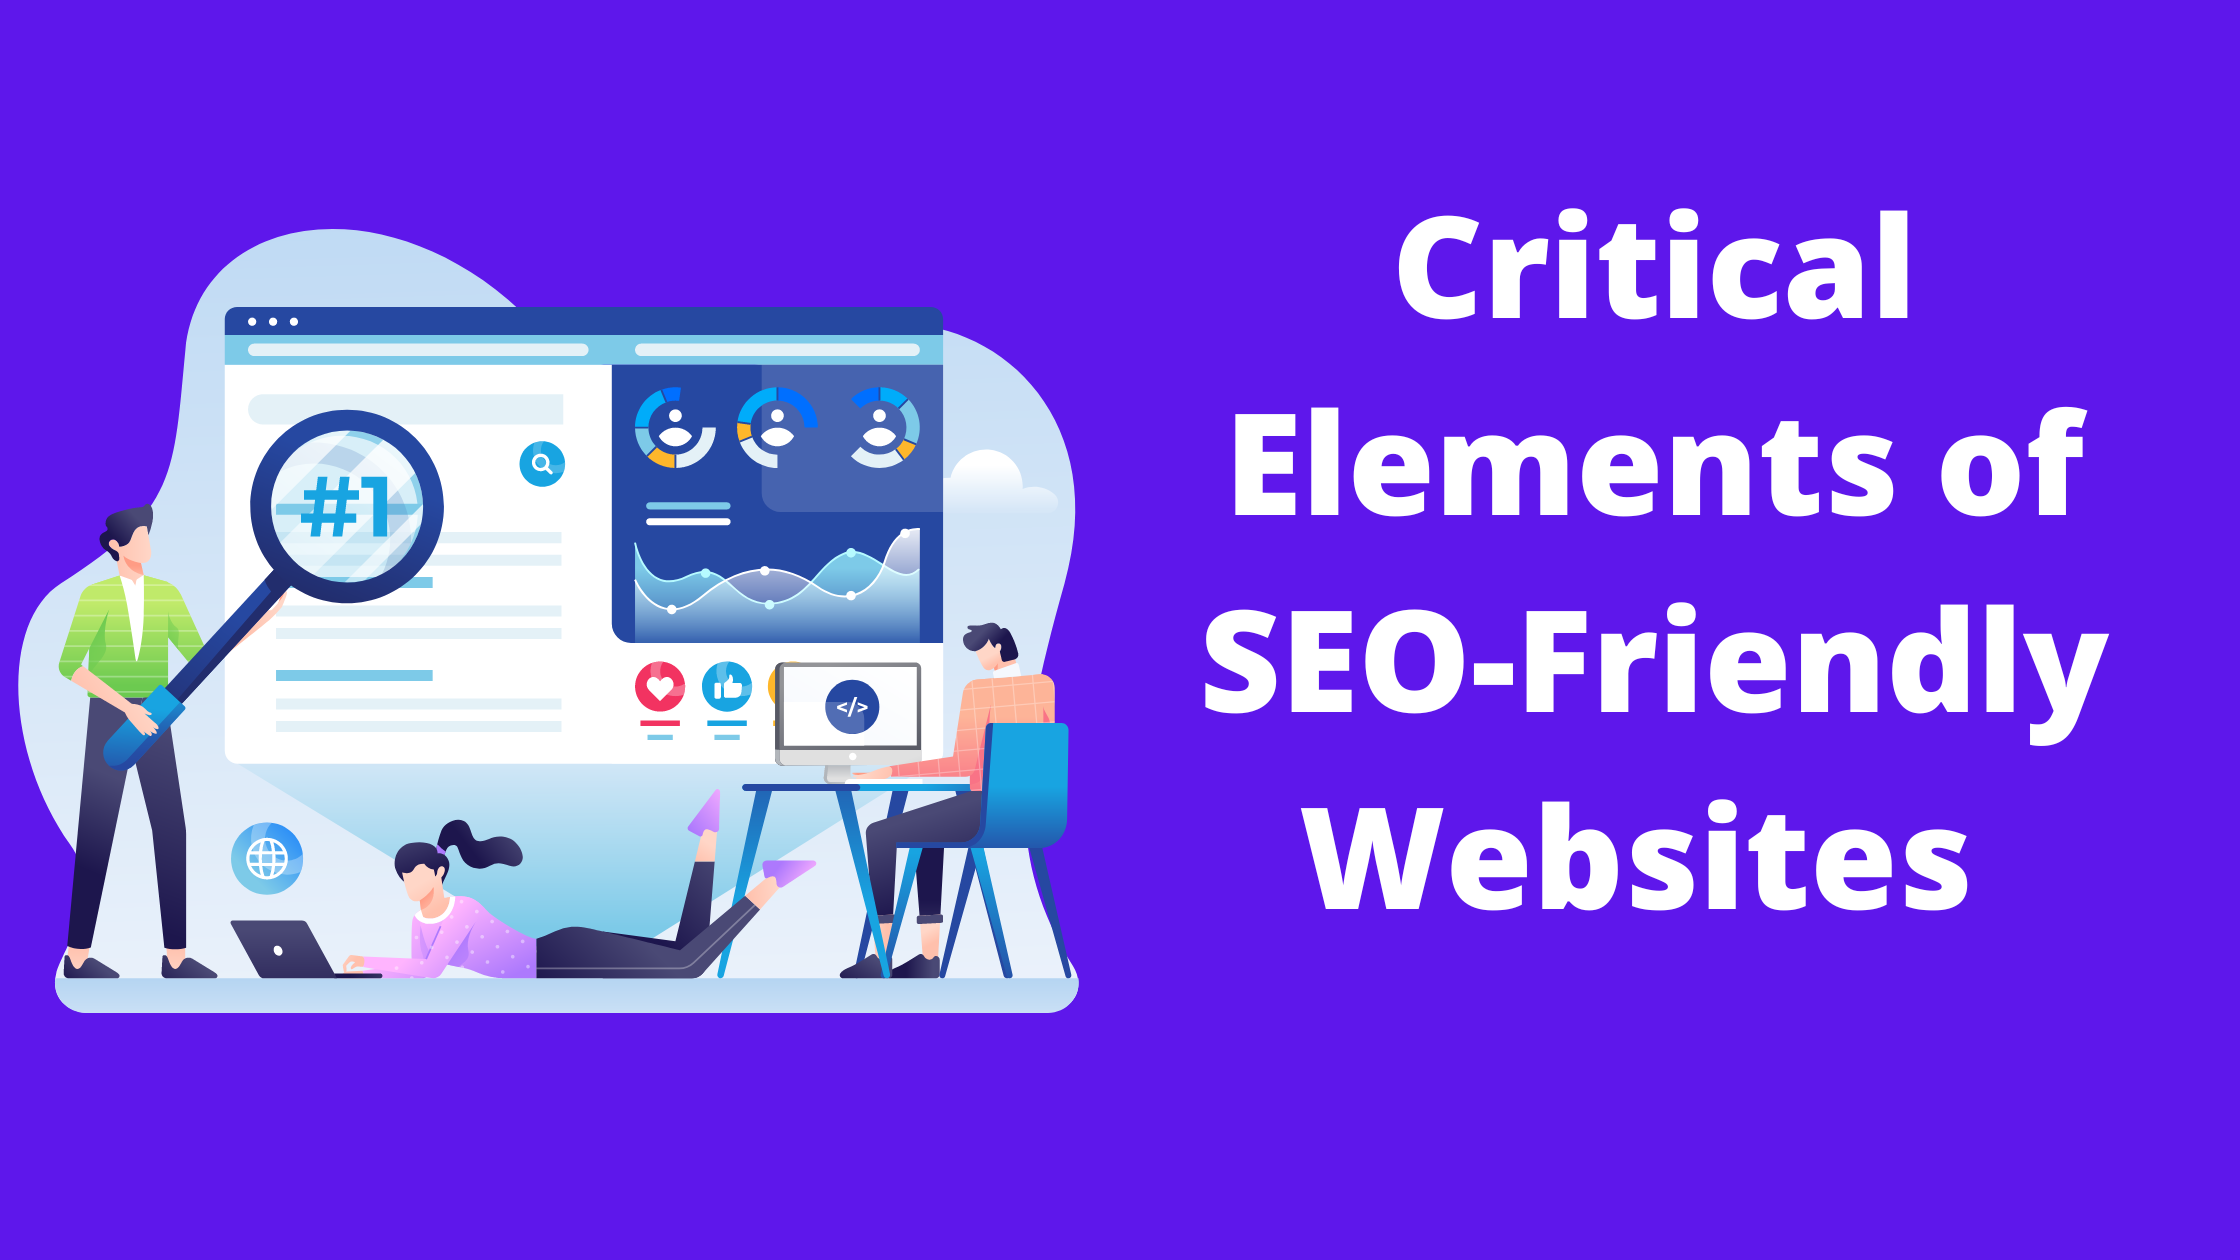 Critical Elements of SEO-Friendly Websites